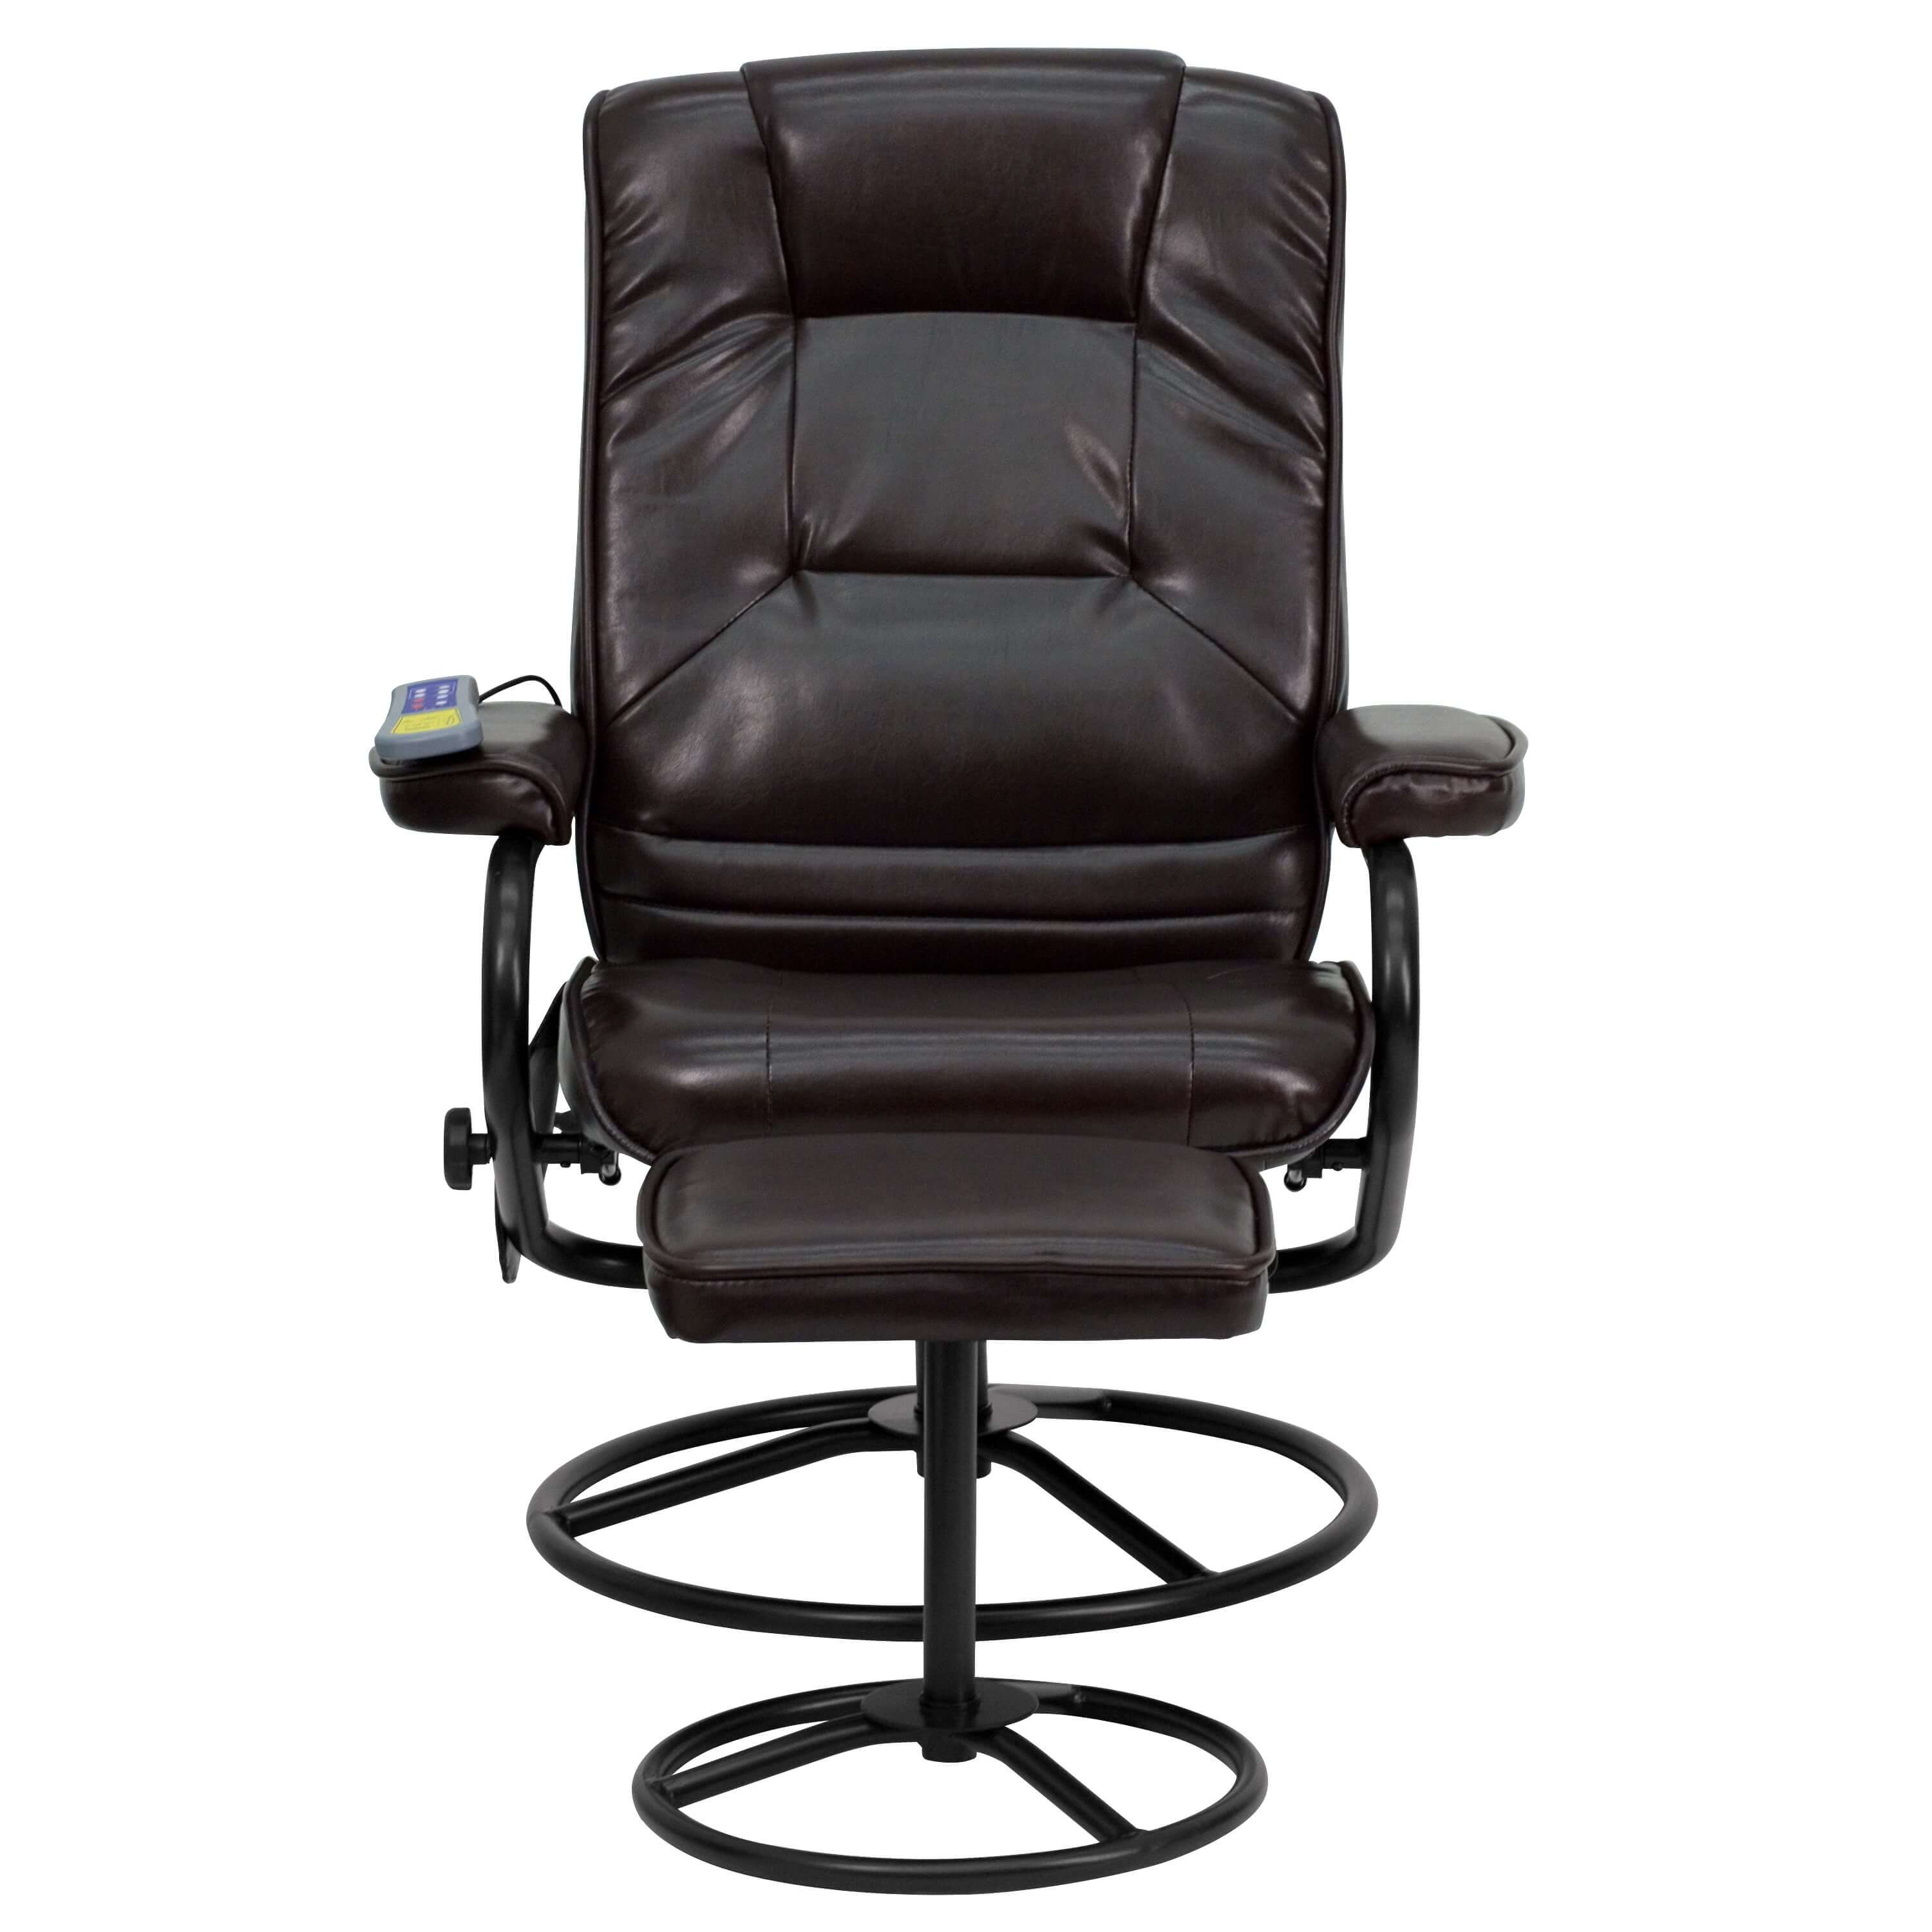 Massage chair recliner front view